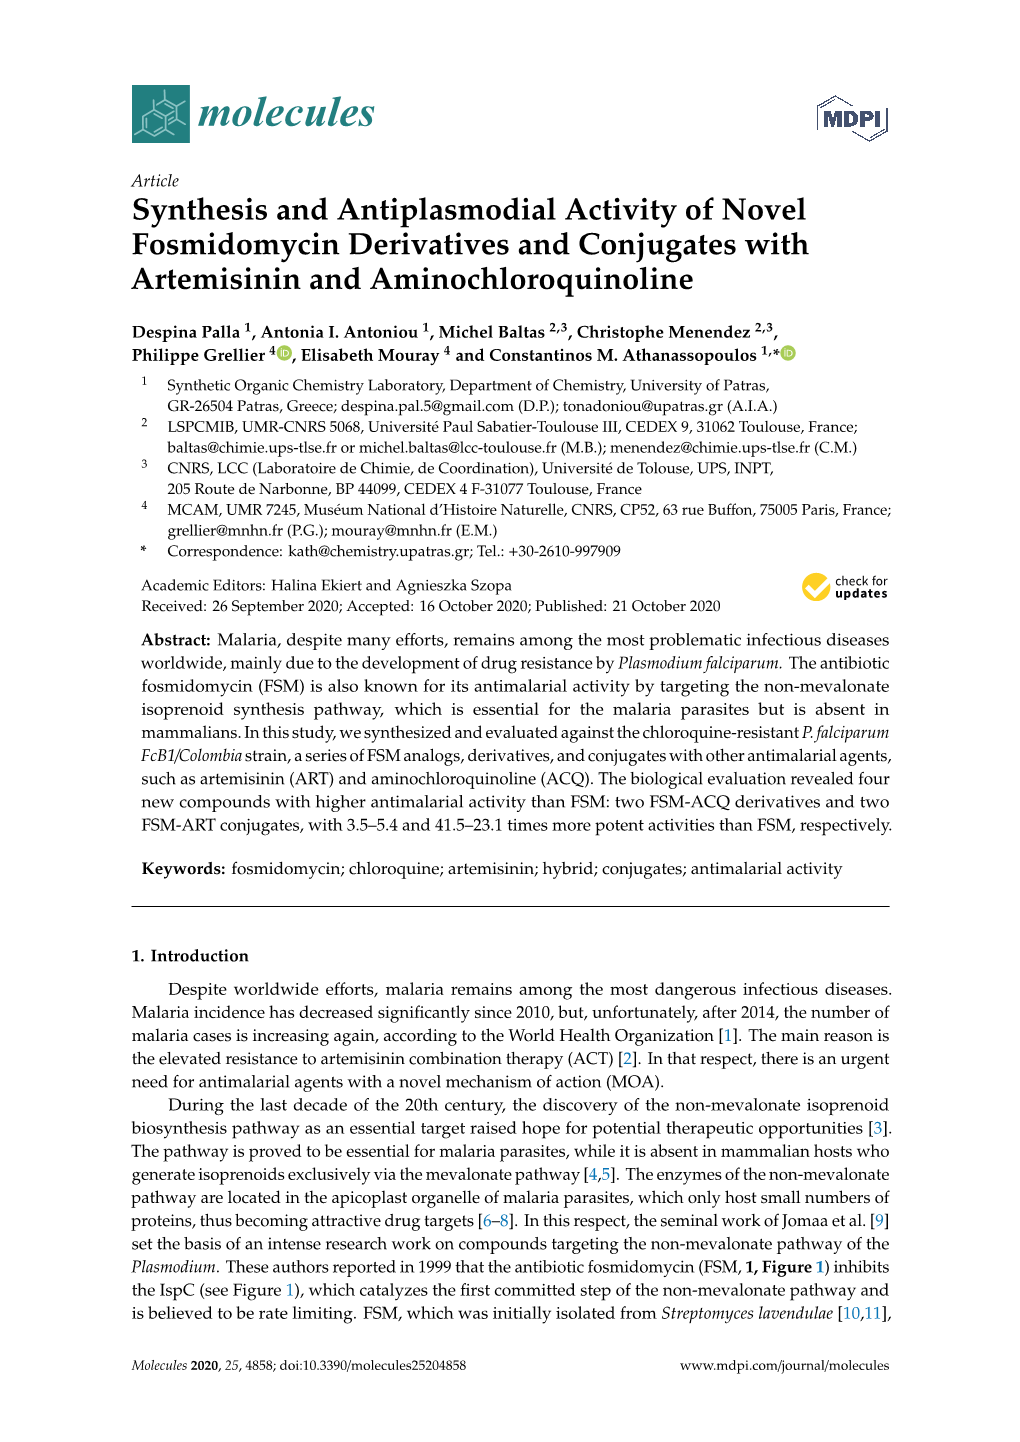 Synthesis and Antiplasmodial Activity of Novel Fosmidomycin Derivatives and Conjugates with Artemisinin and Aminochloroquinoline